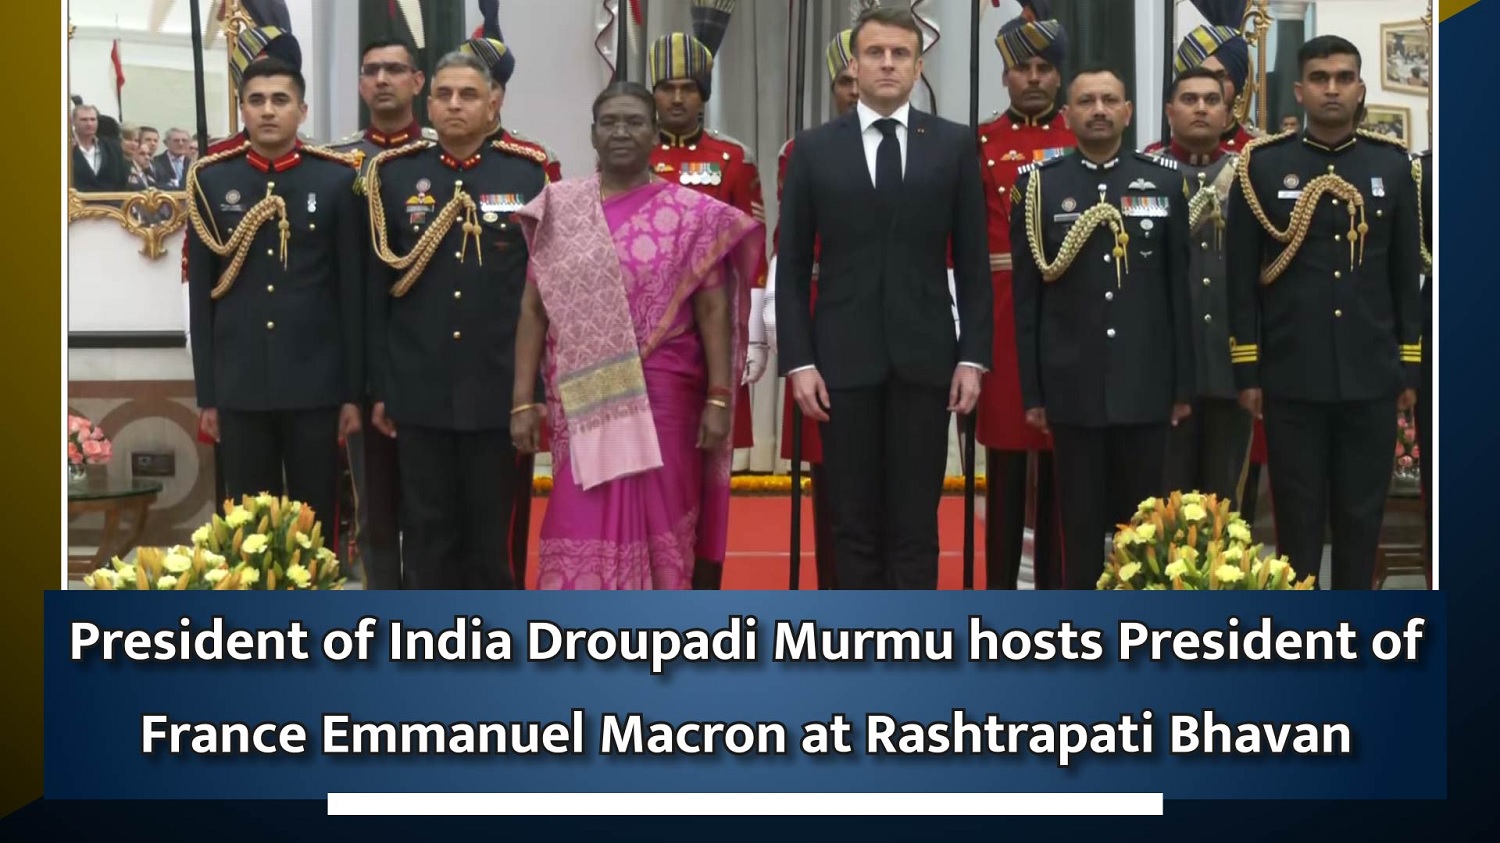 President of India Droupadi Murmu hosts President of France Emmanuel Macron at Rashtrapati Bhavan